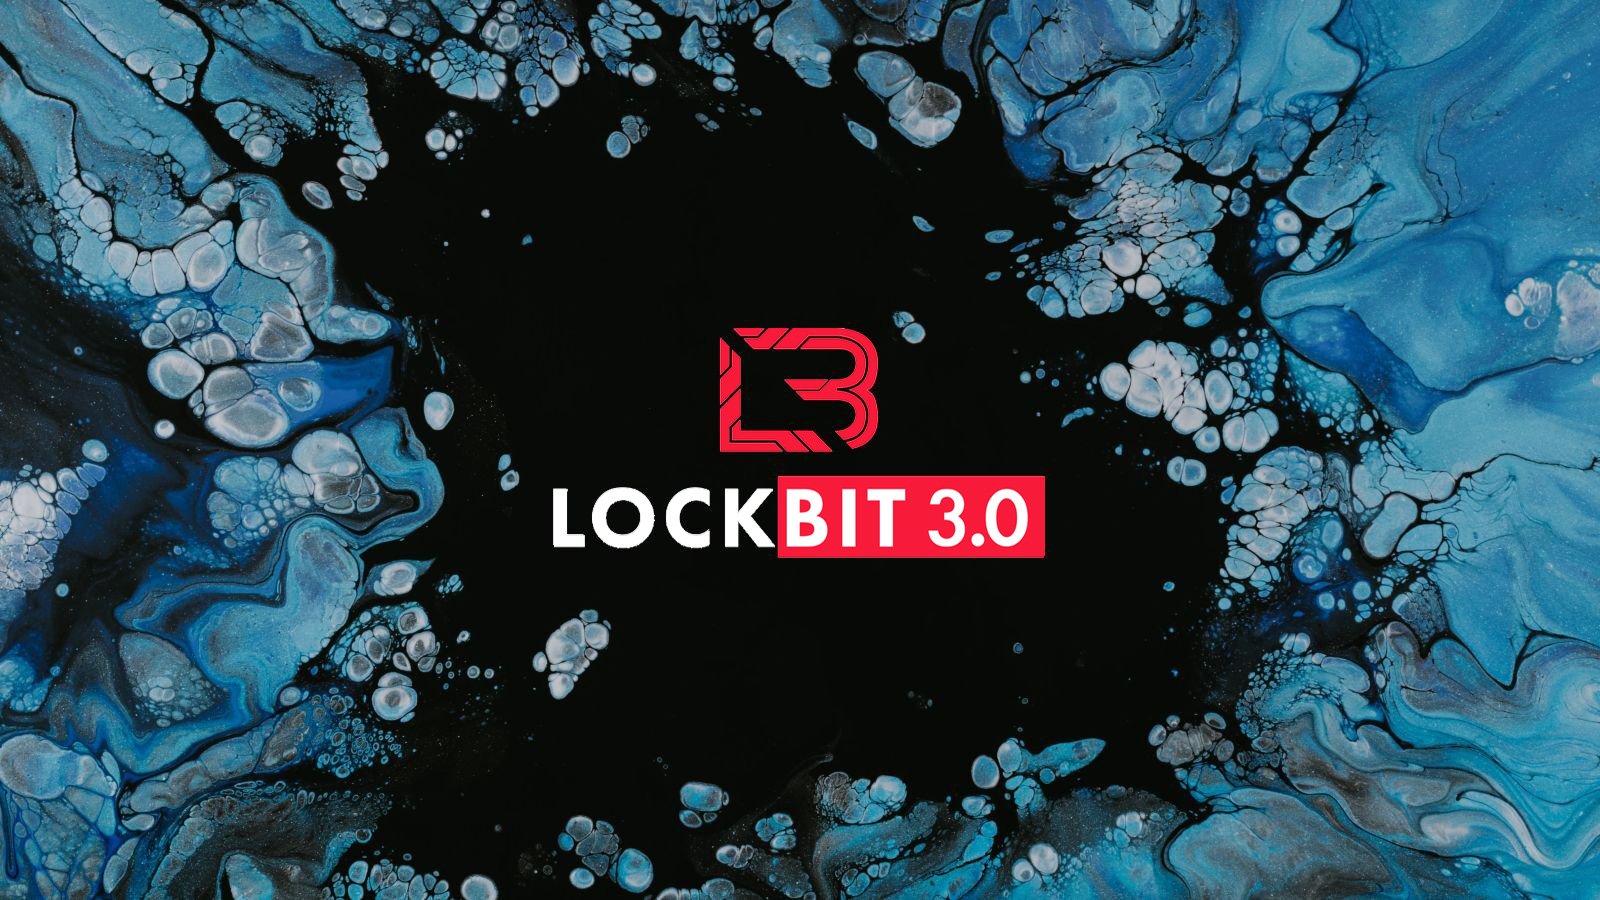 Lockbit 3.0 header